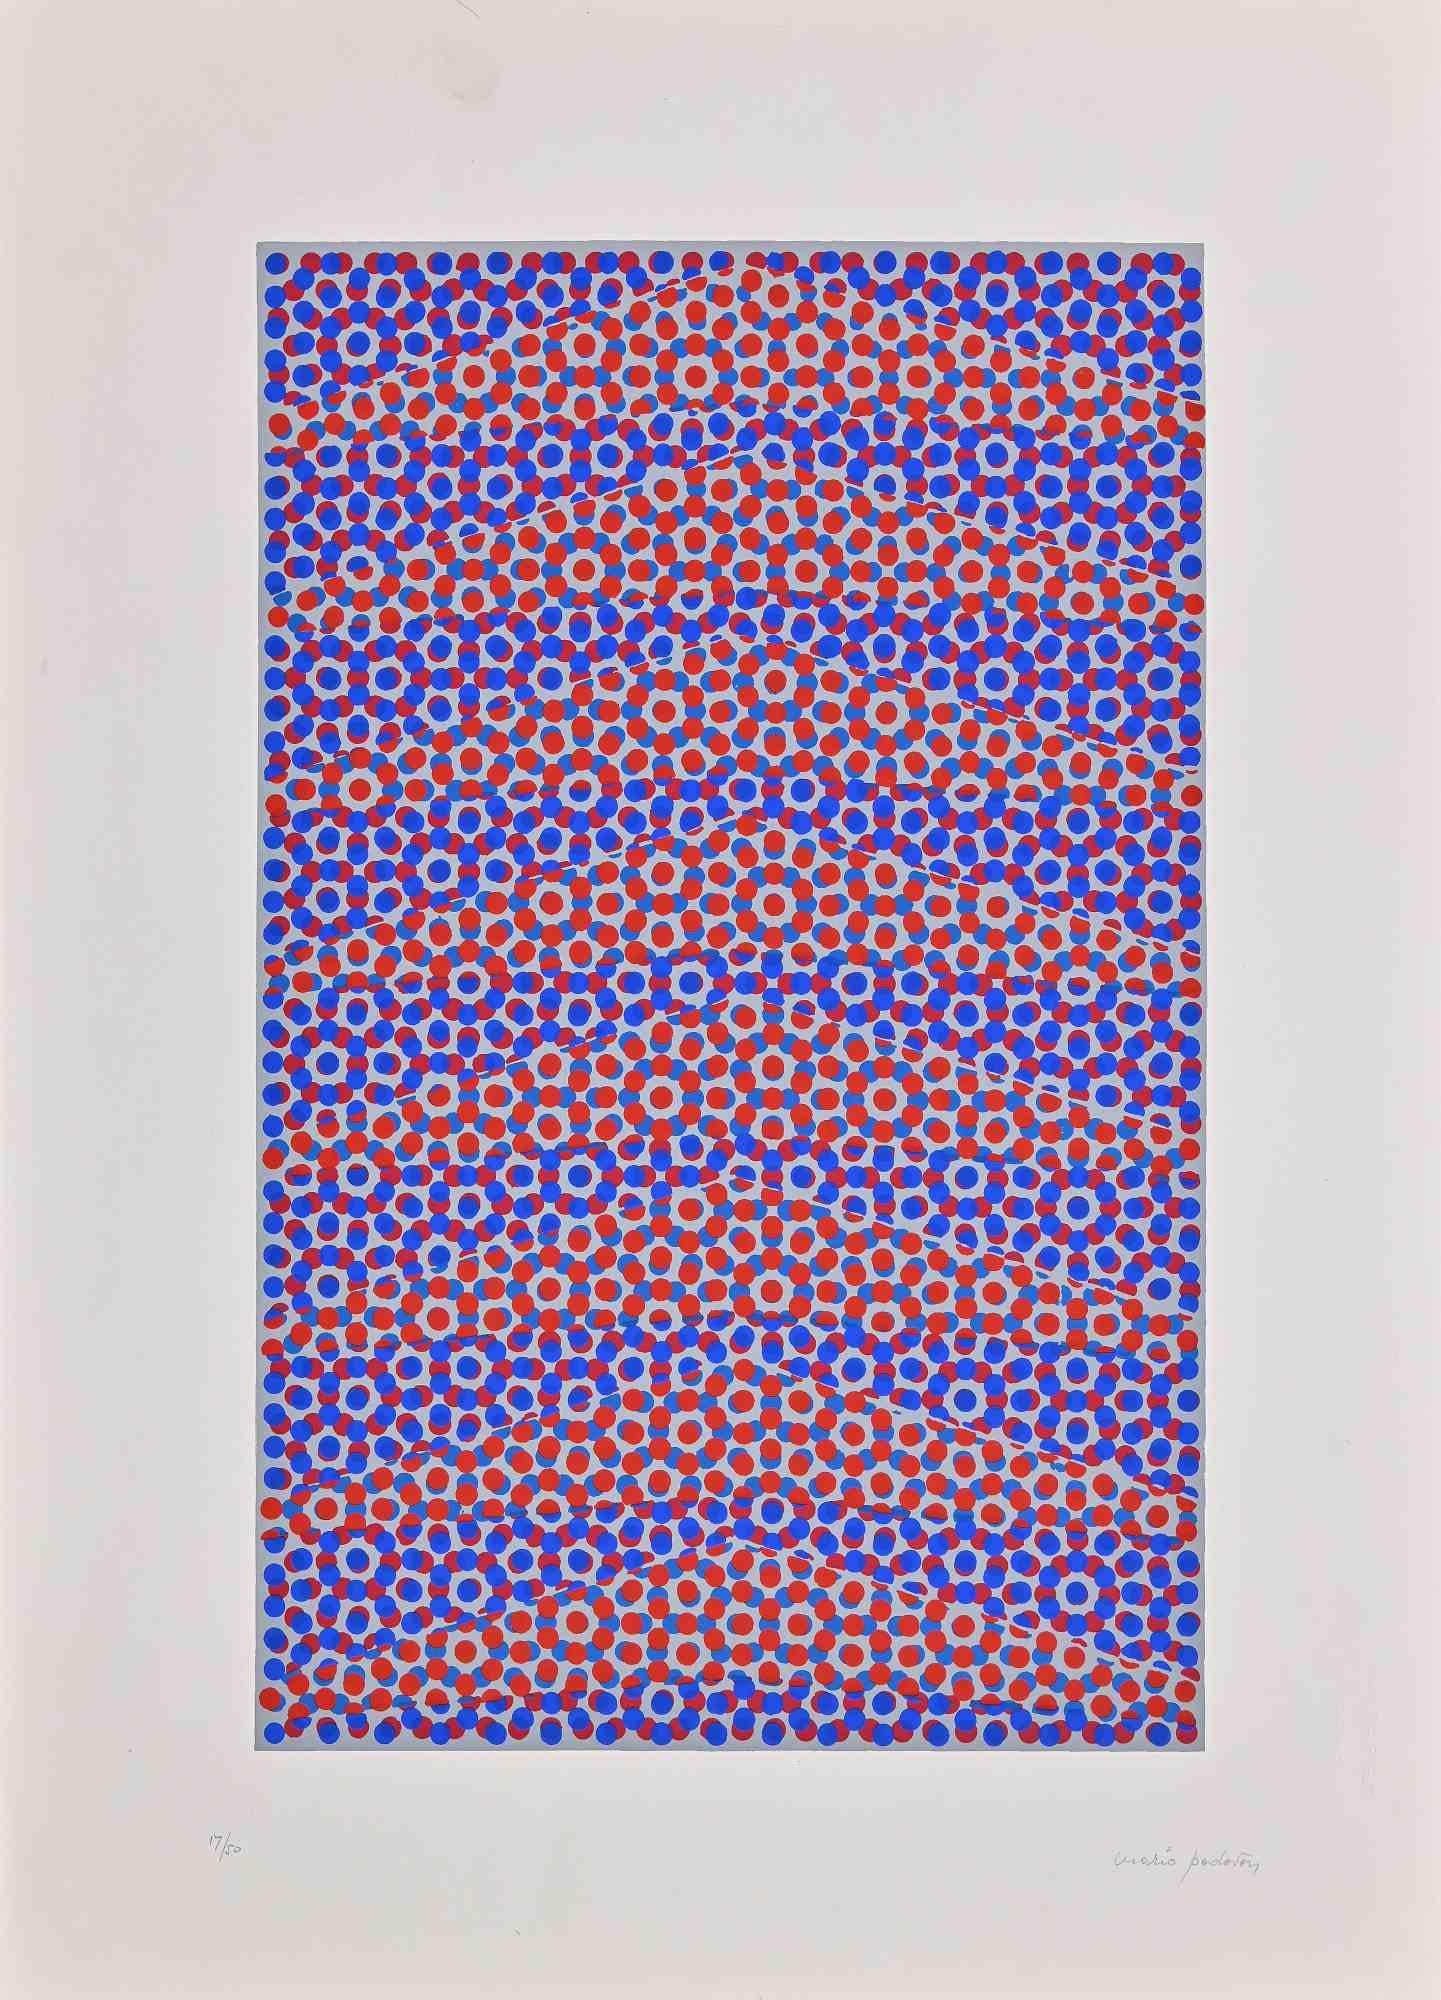 Composition abstraite - Impression sérigraphiée de Mario Padovan - 1971